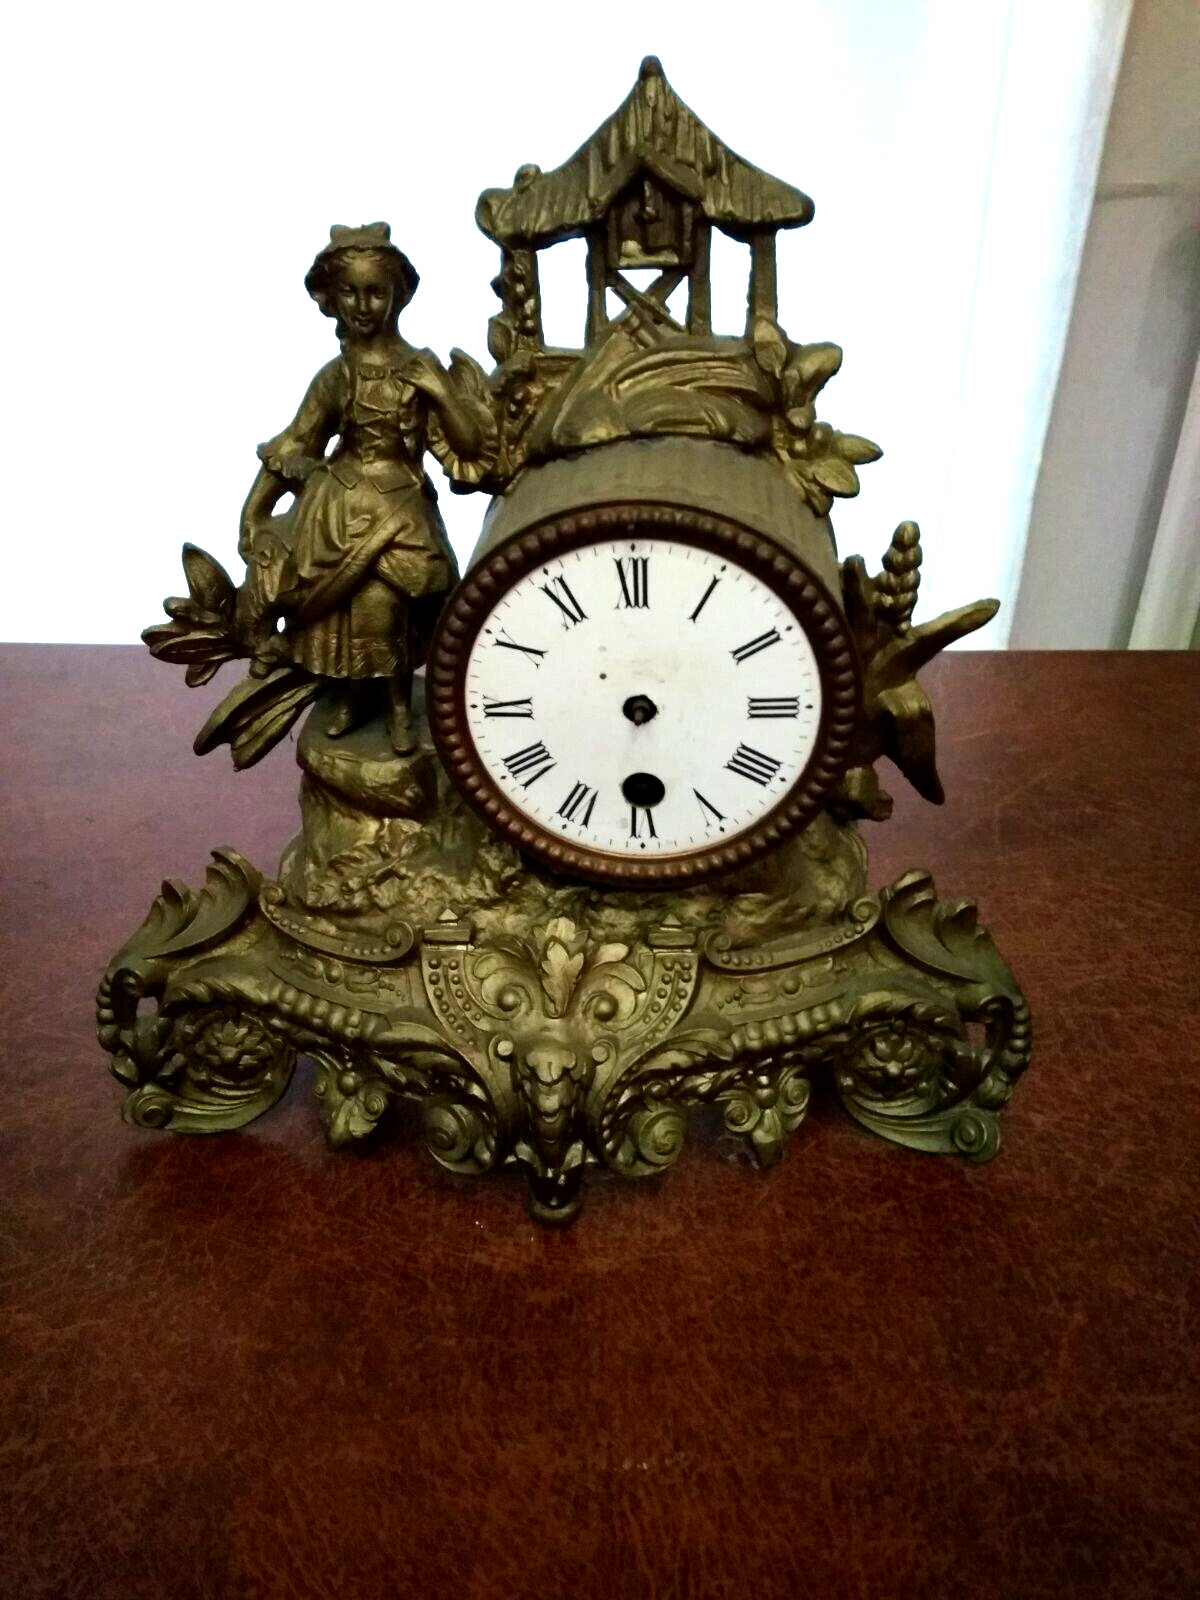 Antique French mantel clock. Original 18th-19th century 2